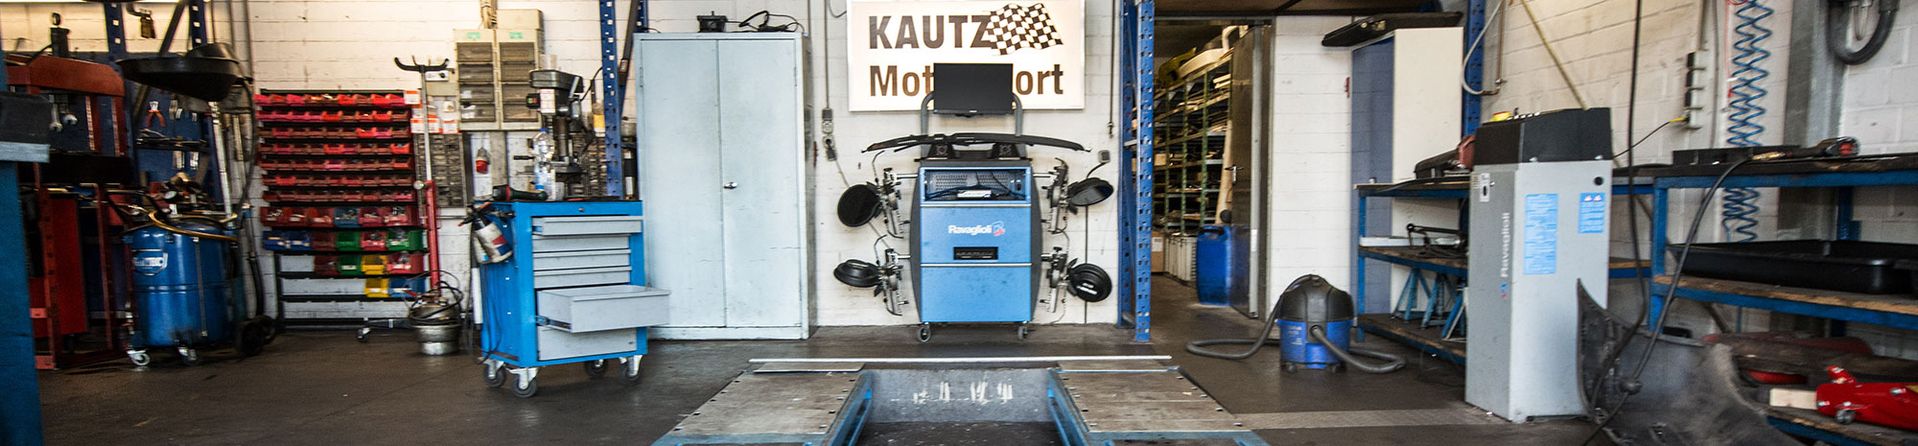 Kfz-Werkstatt